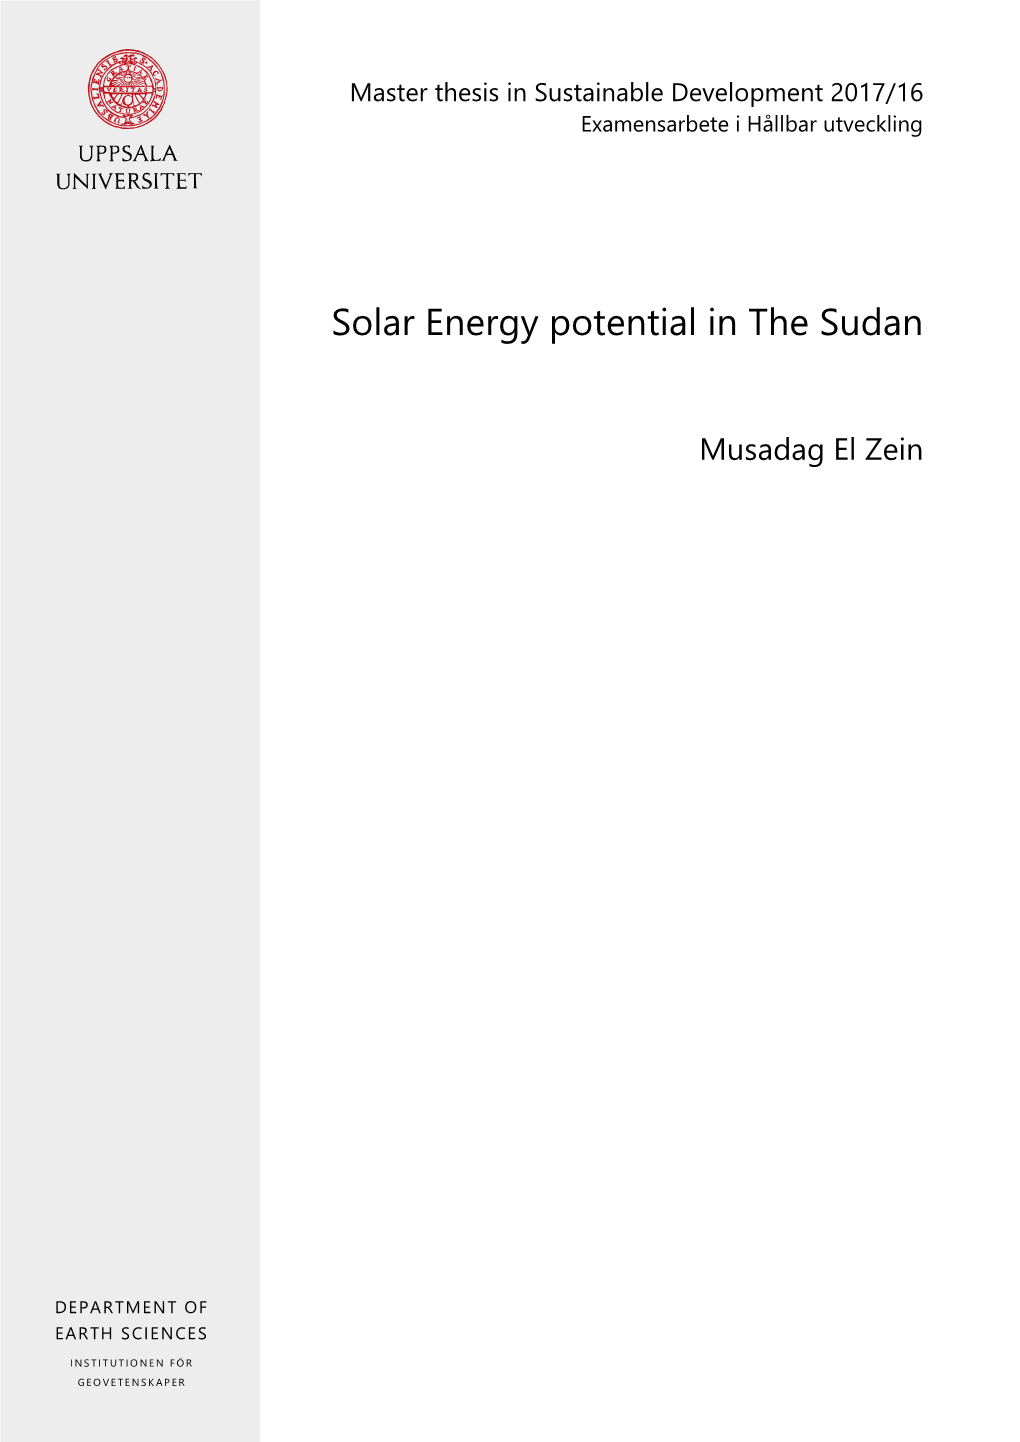 Solar Energy Potential in the Sudan